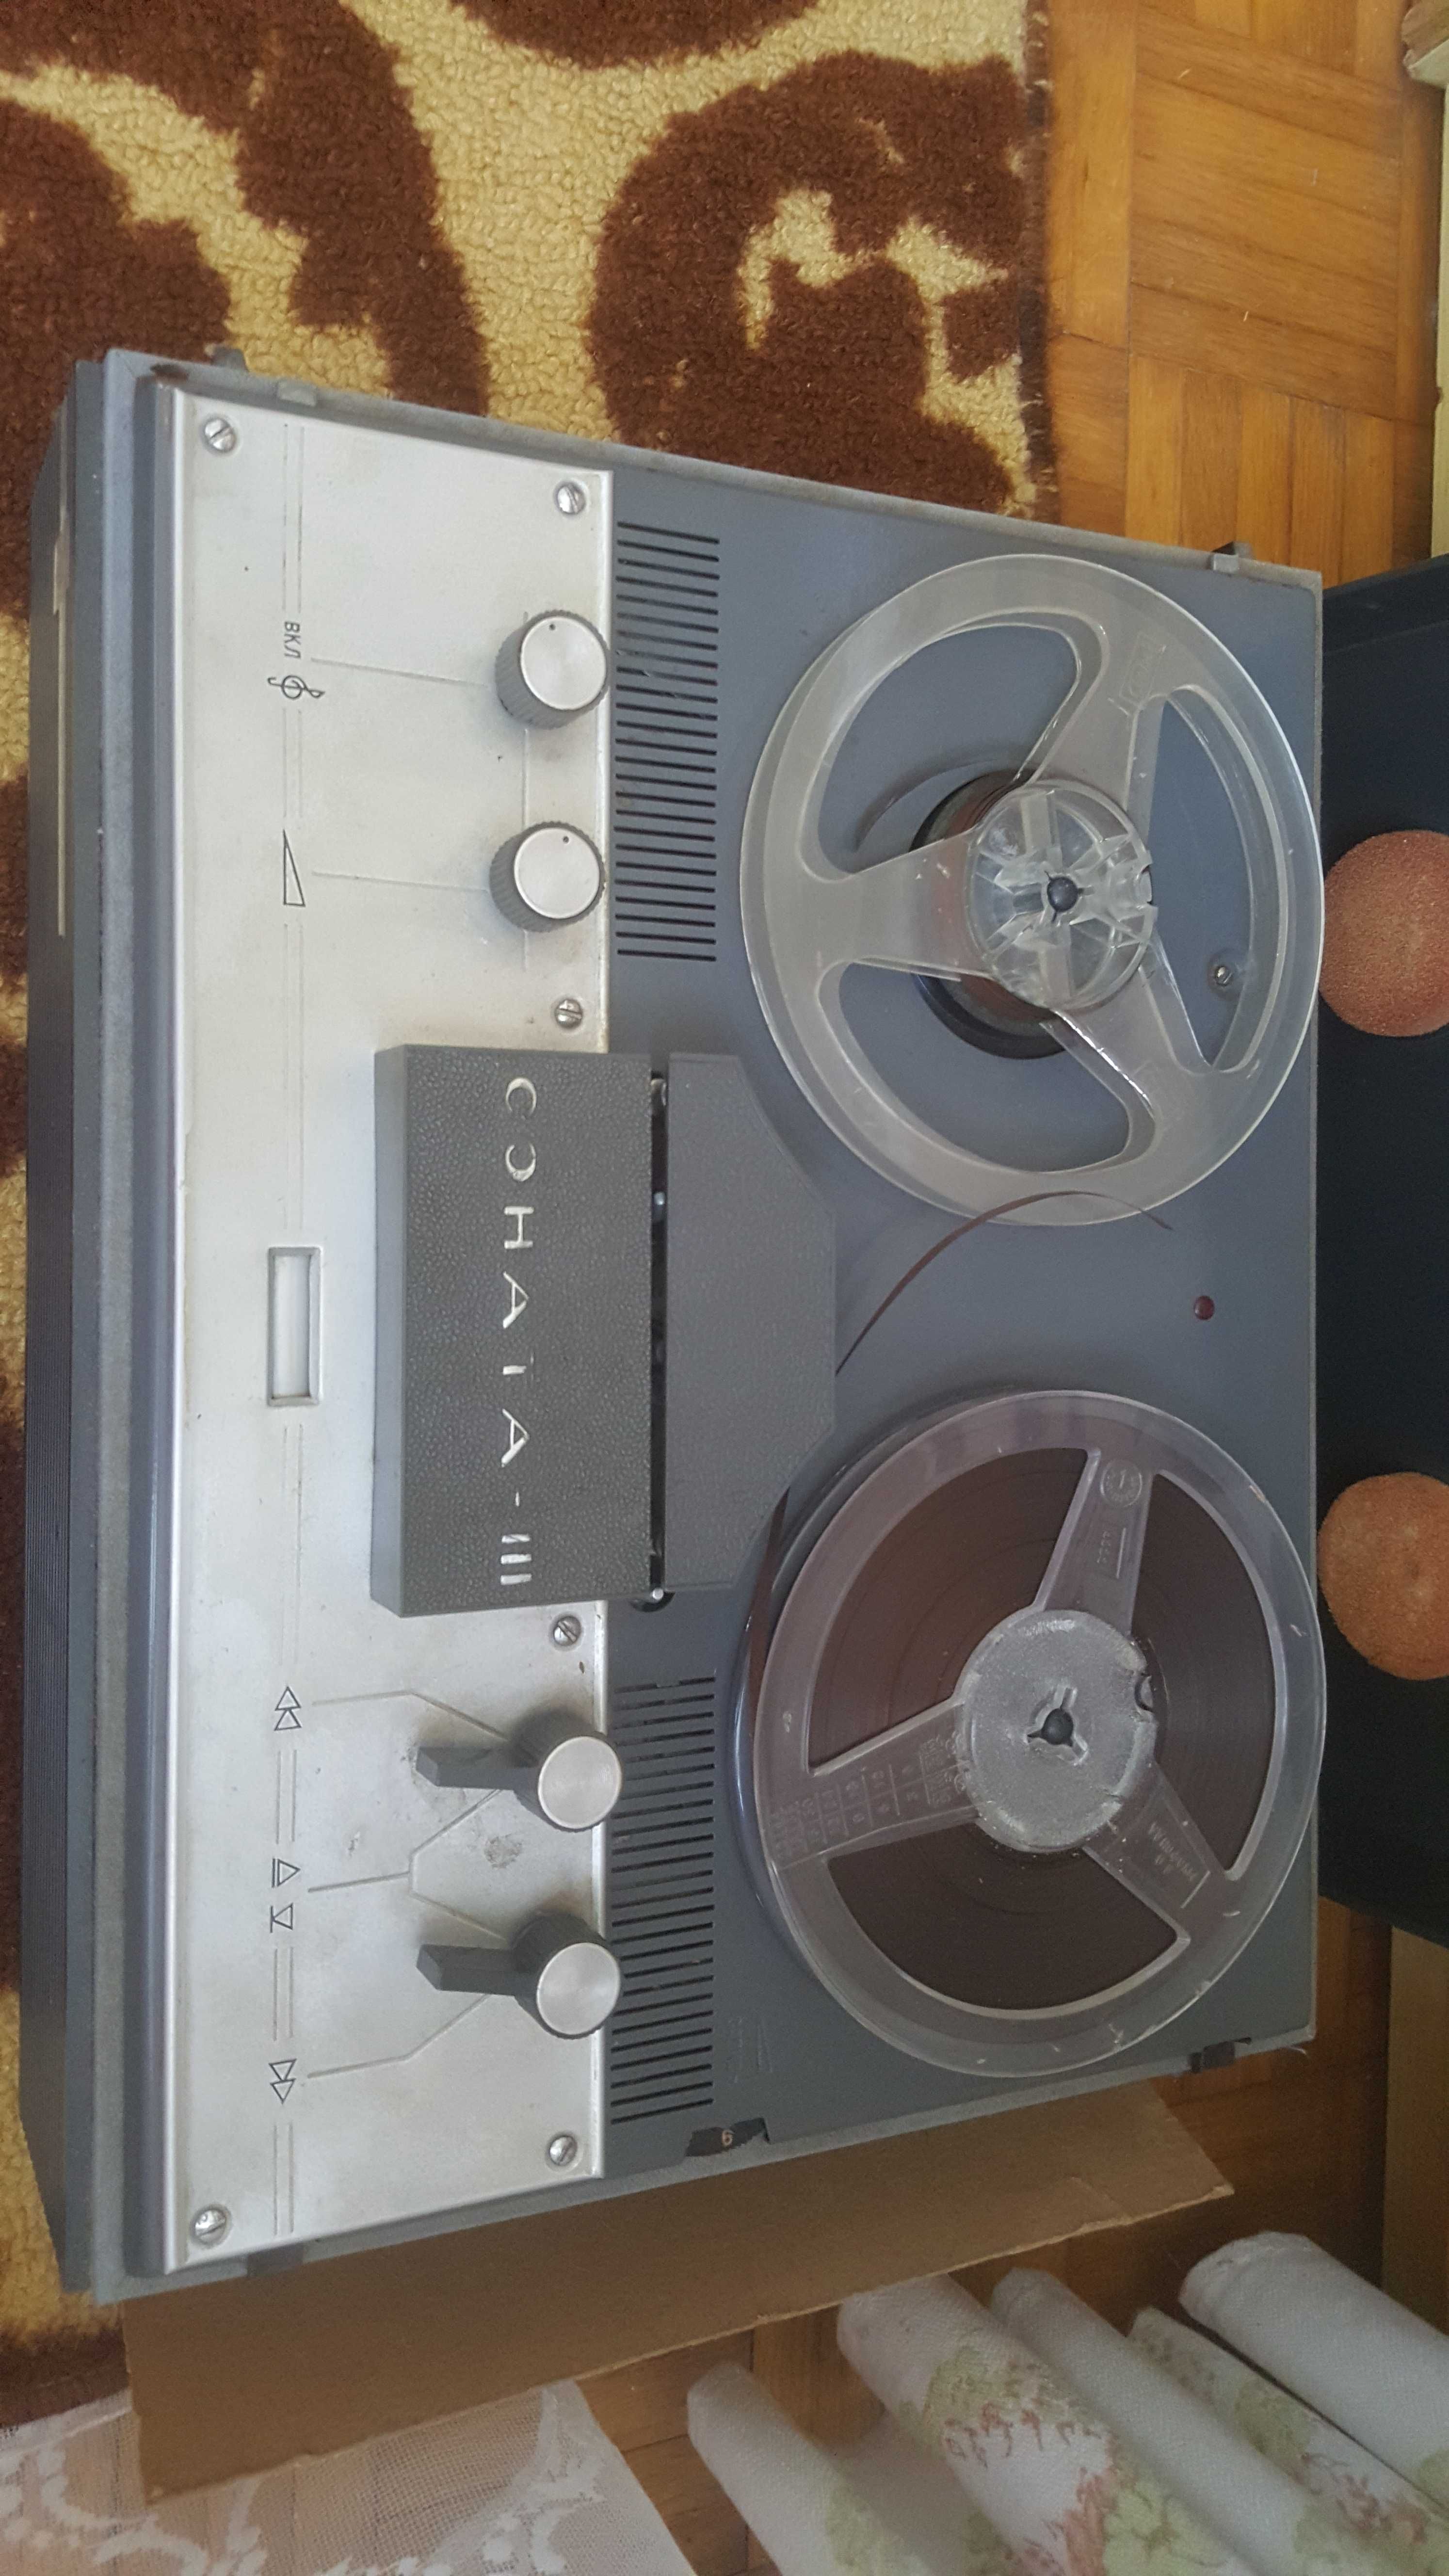 magnetofon szpulowy stary "COHATA III"